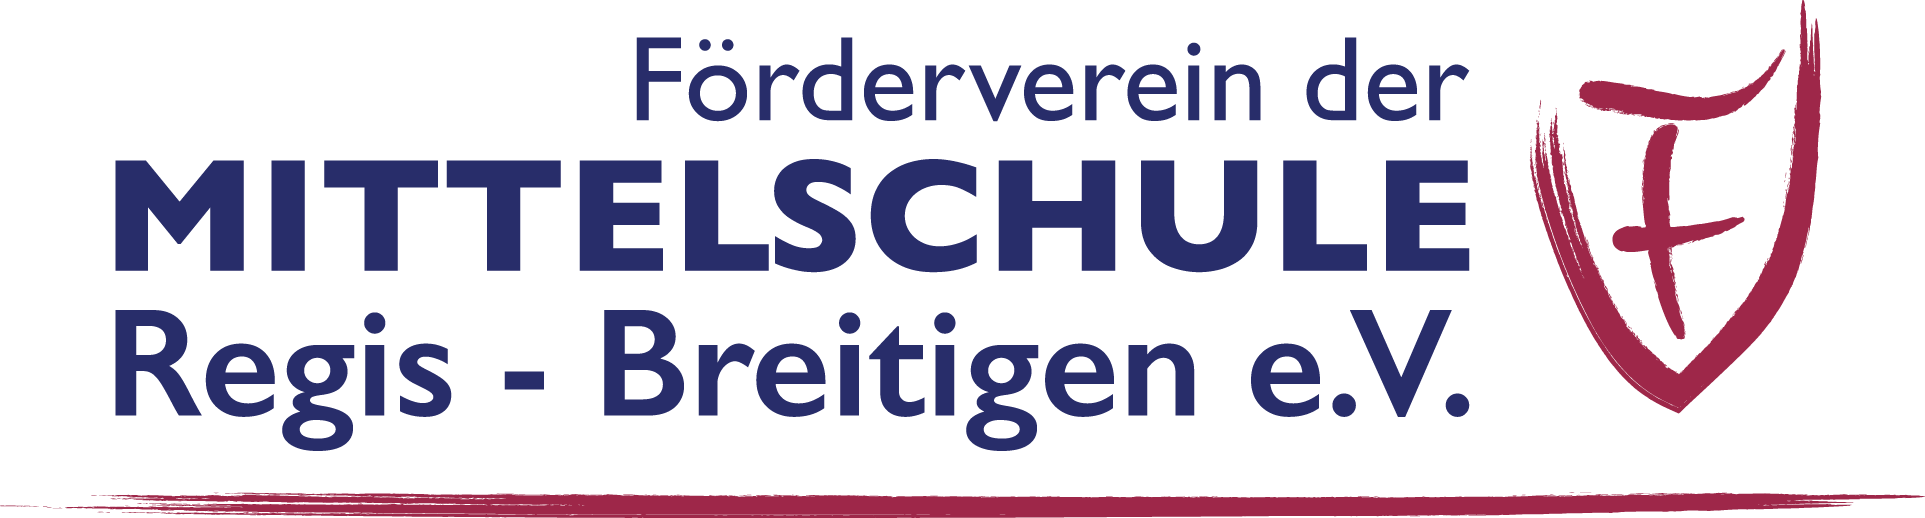 logo frderverein final